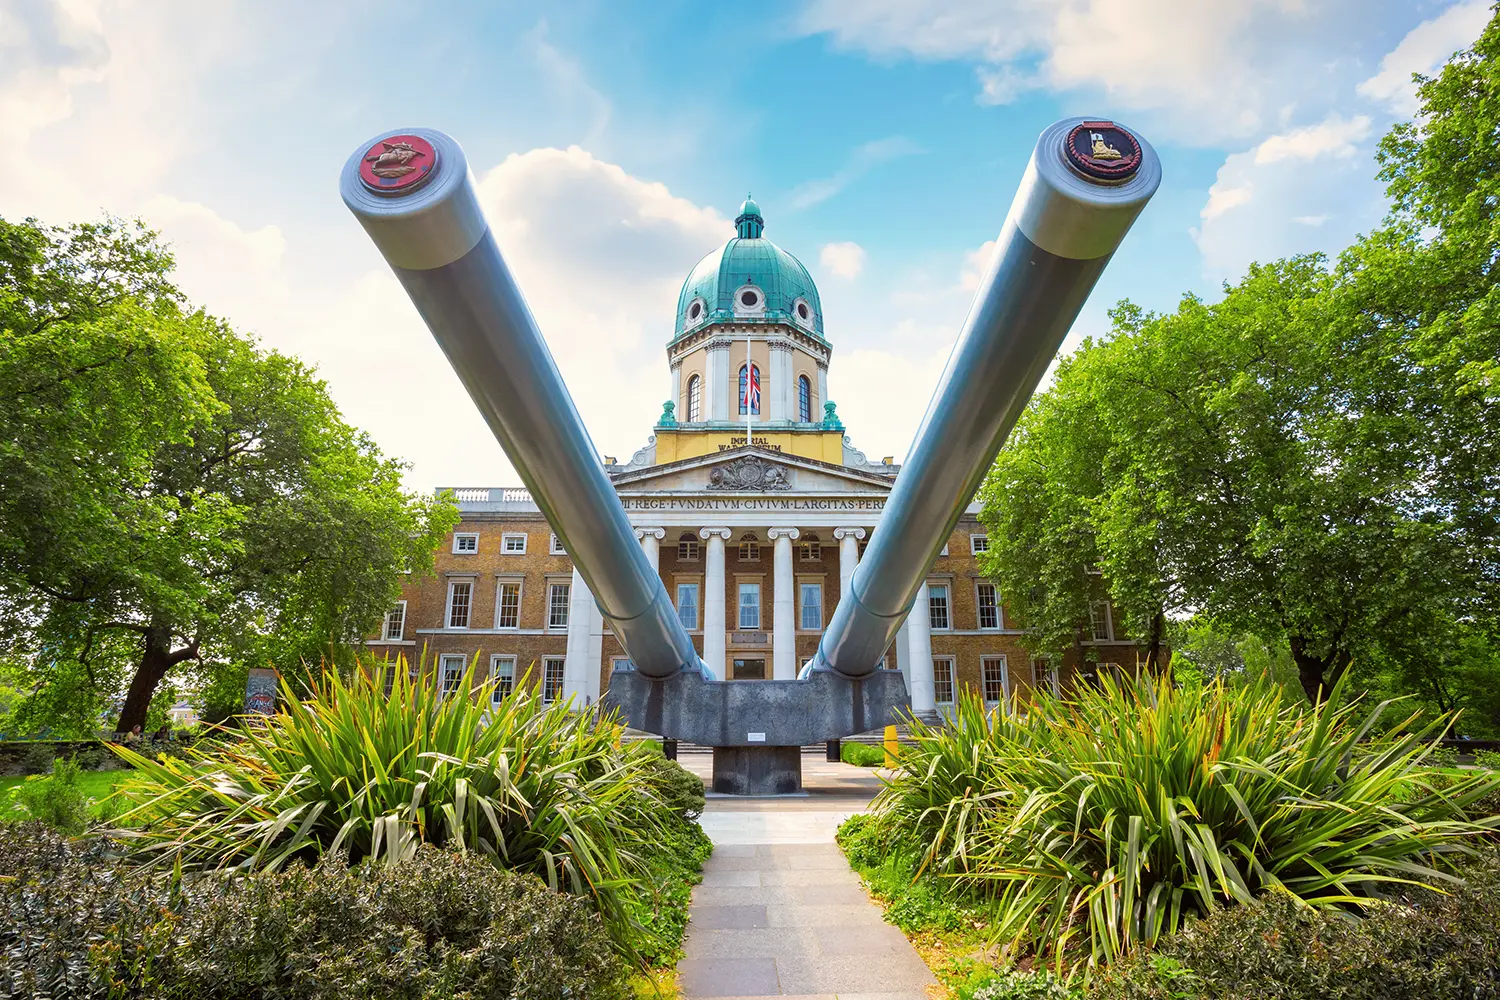 Imperial War Museum in London, UK